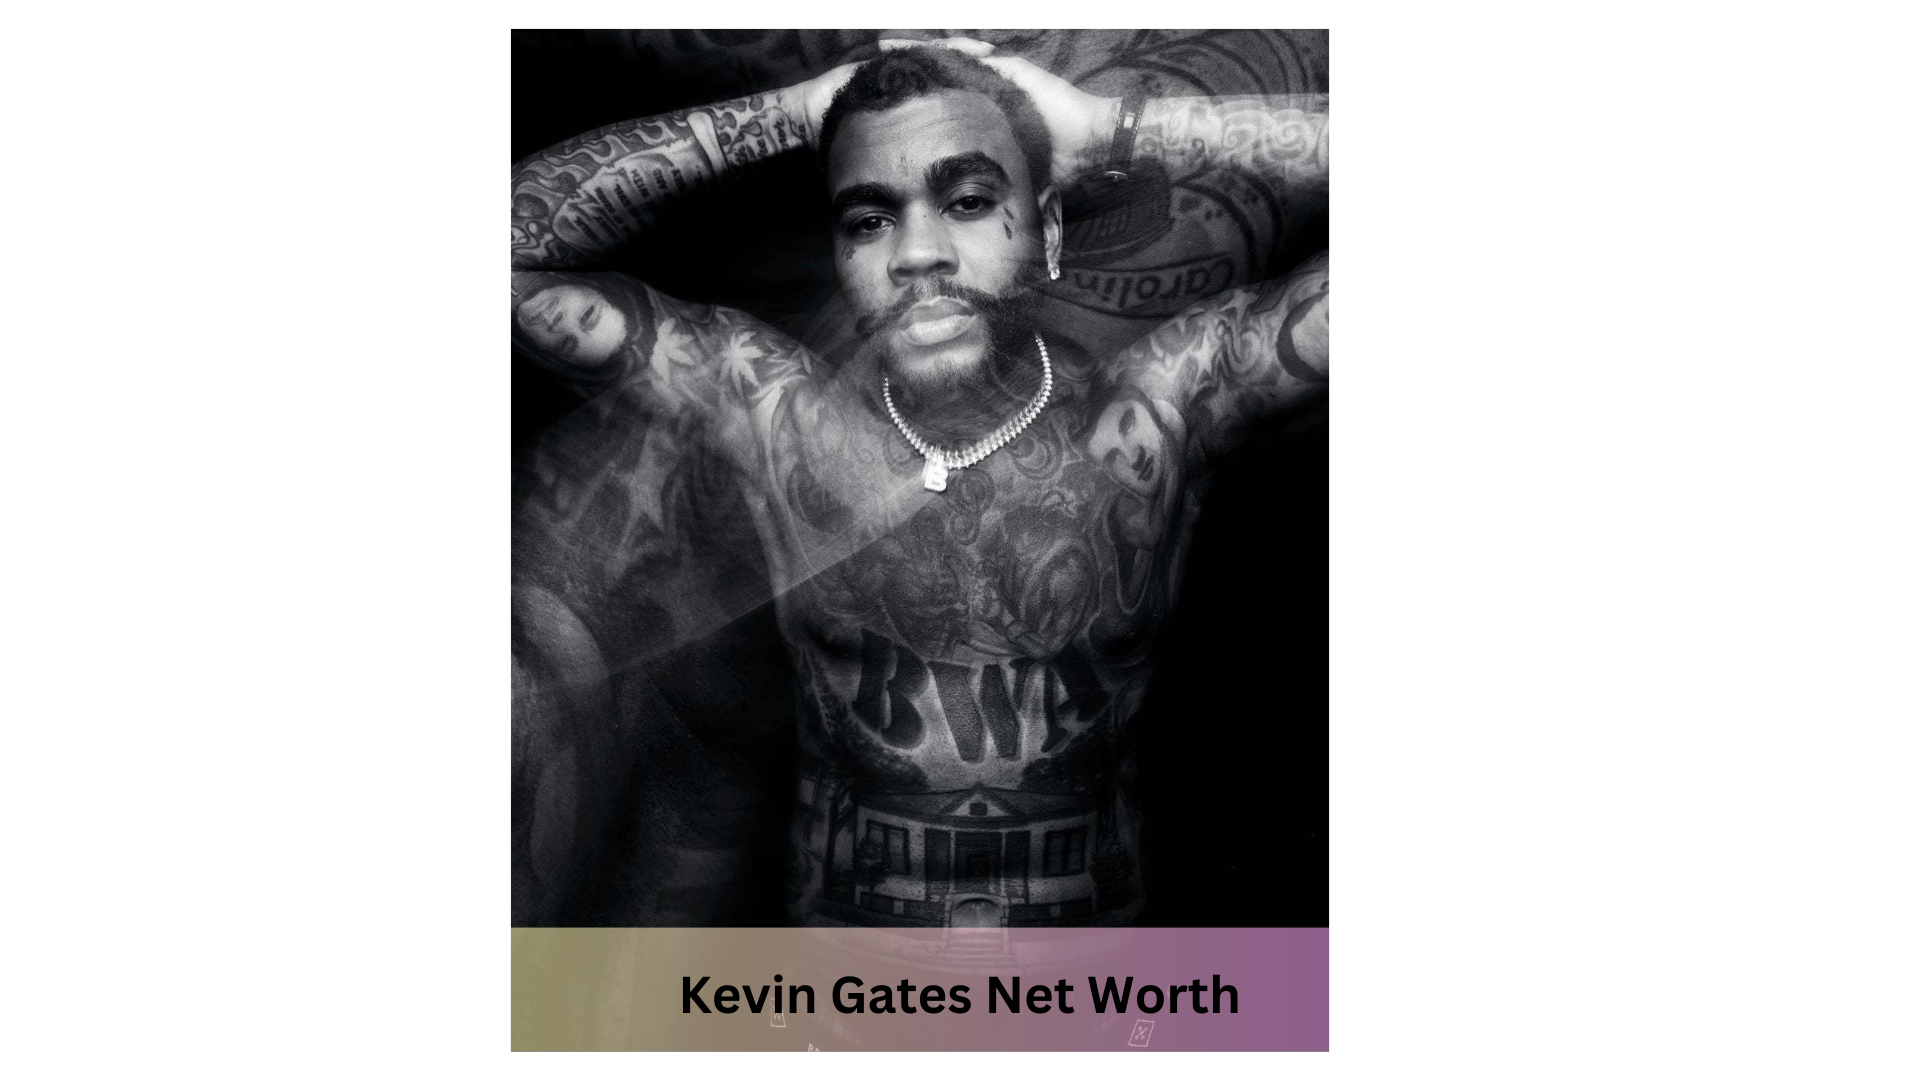 Kevin gates net worth